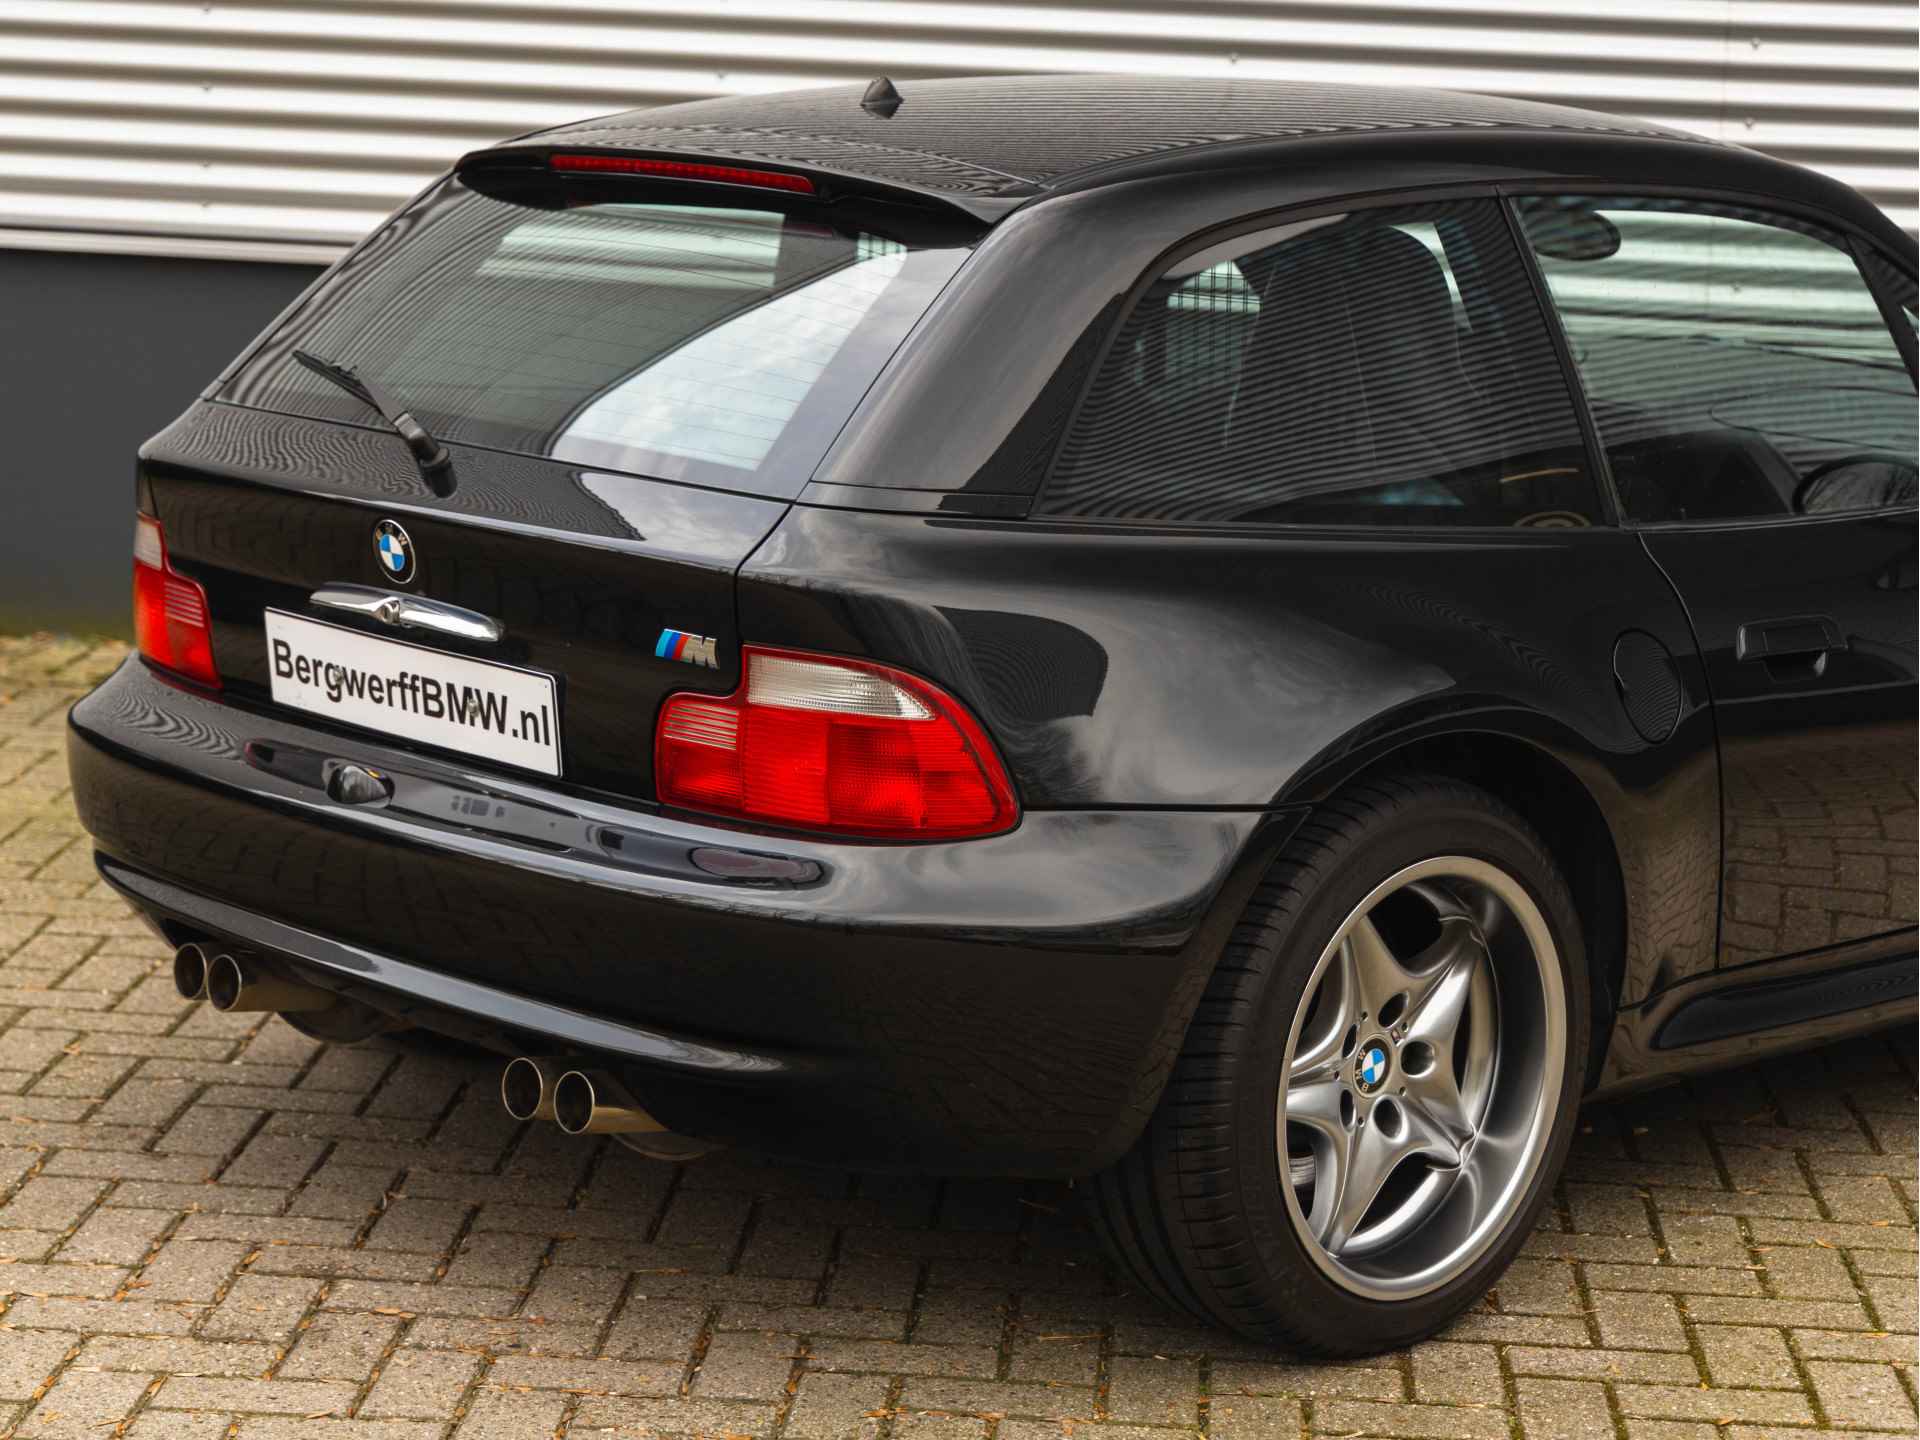 BMW Z3 M Coupé 3.2 M - S54 - 1 of 269 - 9/29